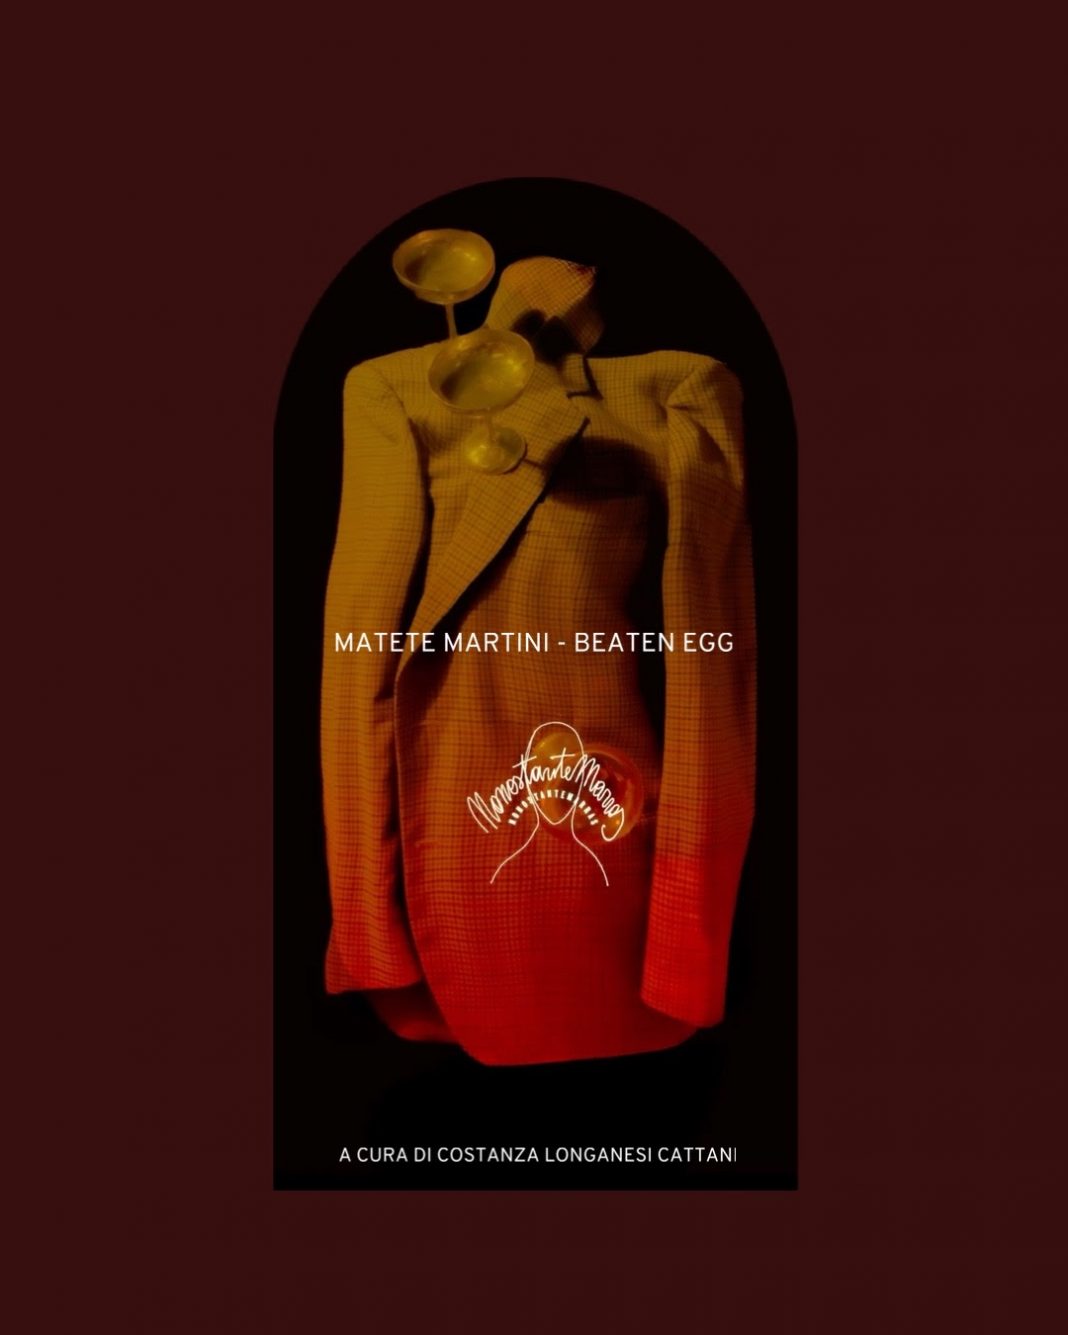 Matete Martini – Beaten Egghttps://www.exibart.com/repository/media/formidable/11/img/fd1/NonostanteMarras-1068x1335.jpg